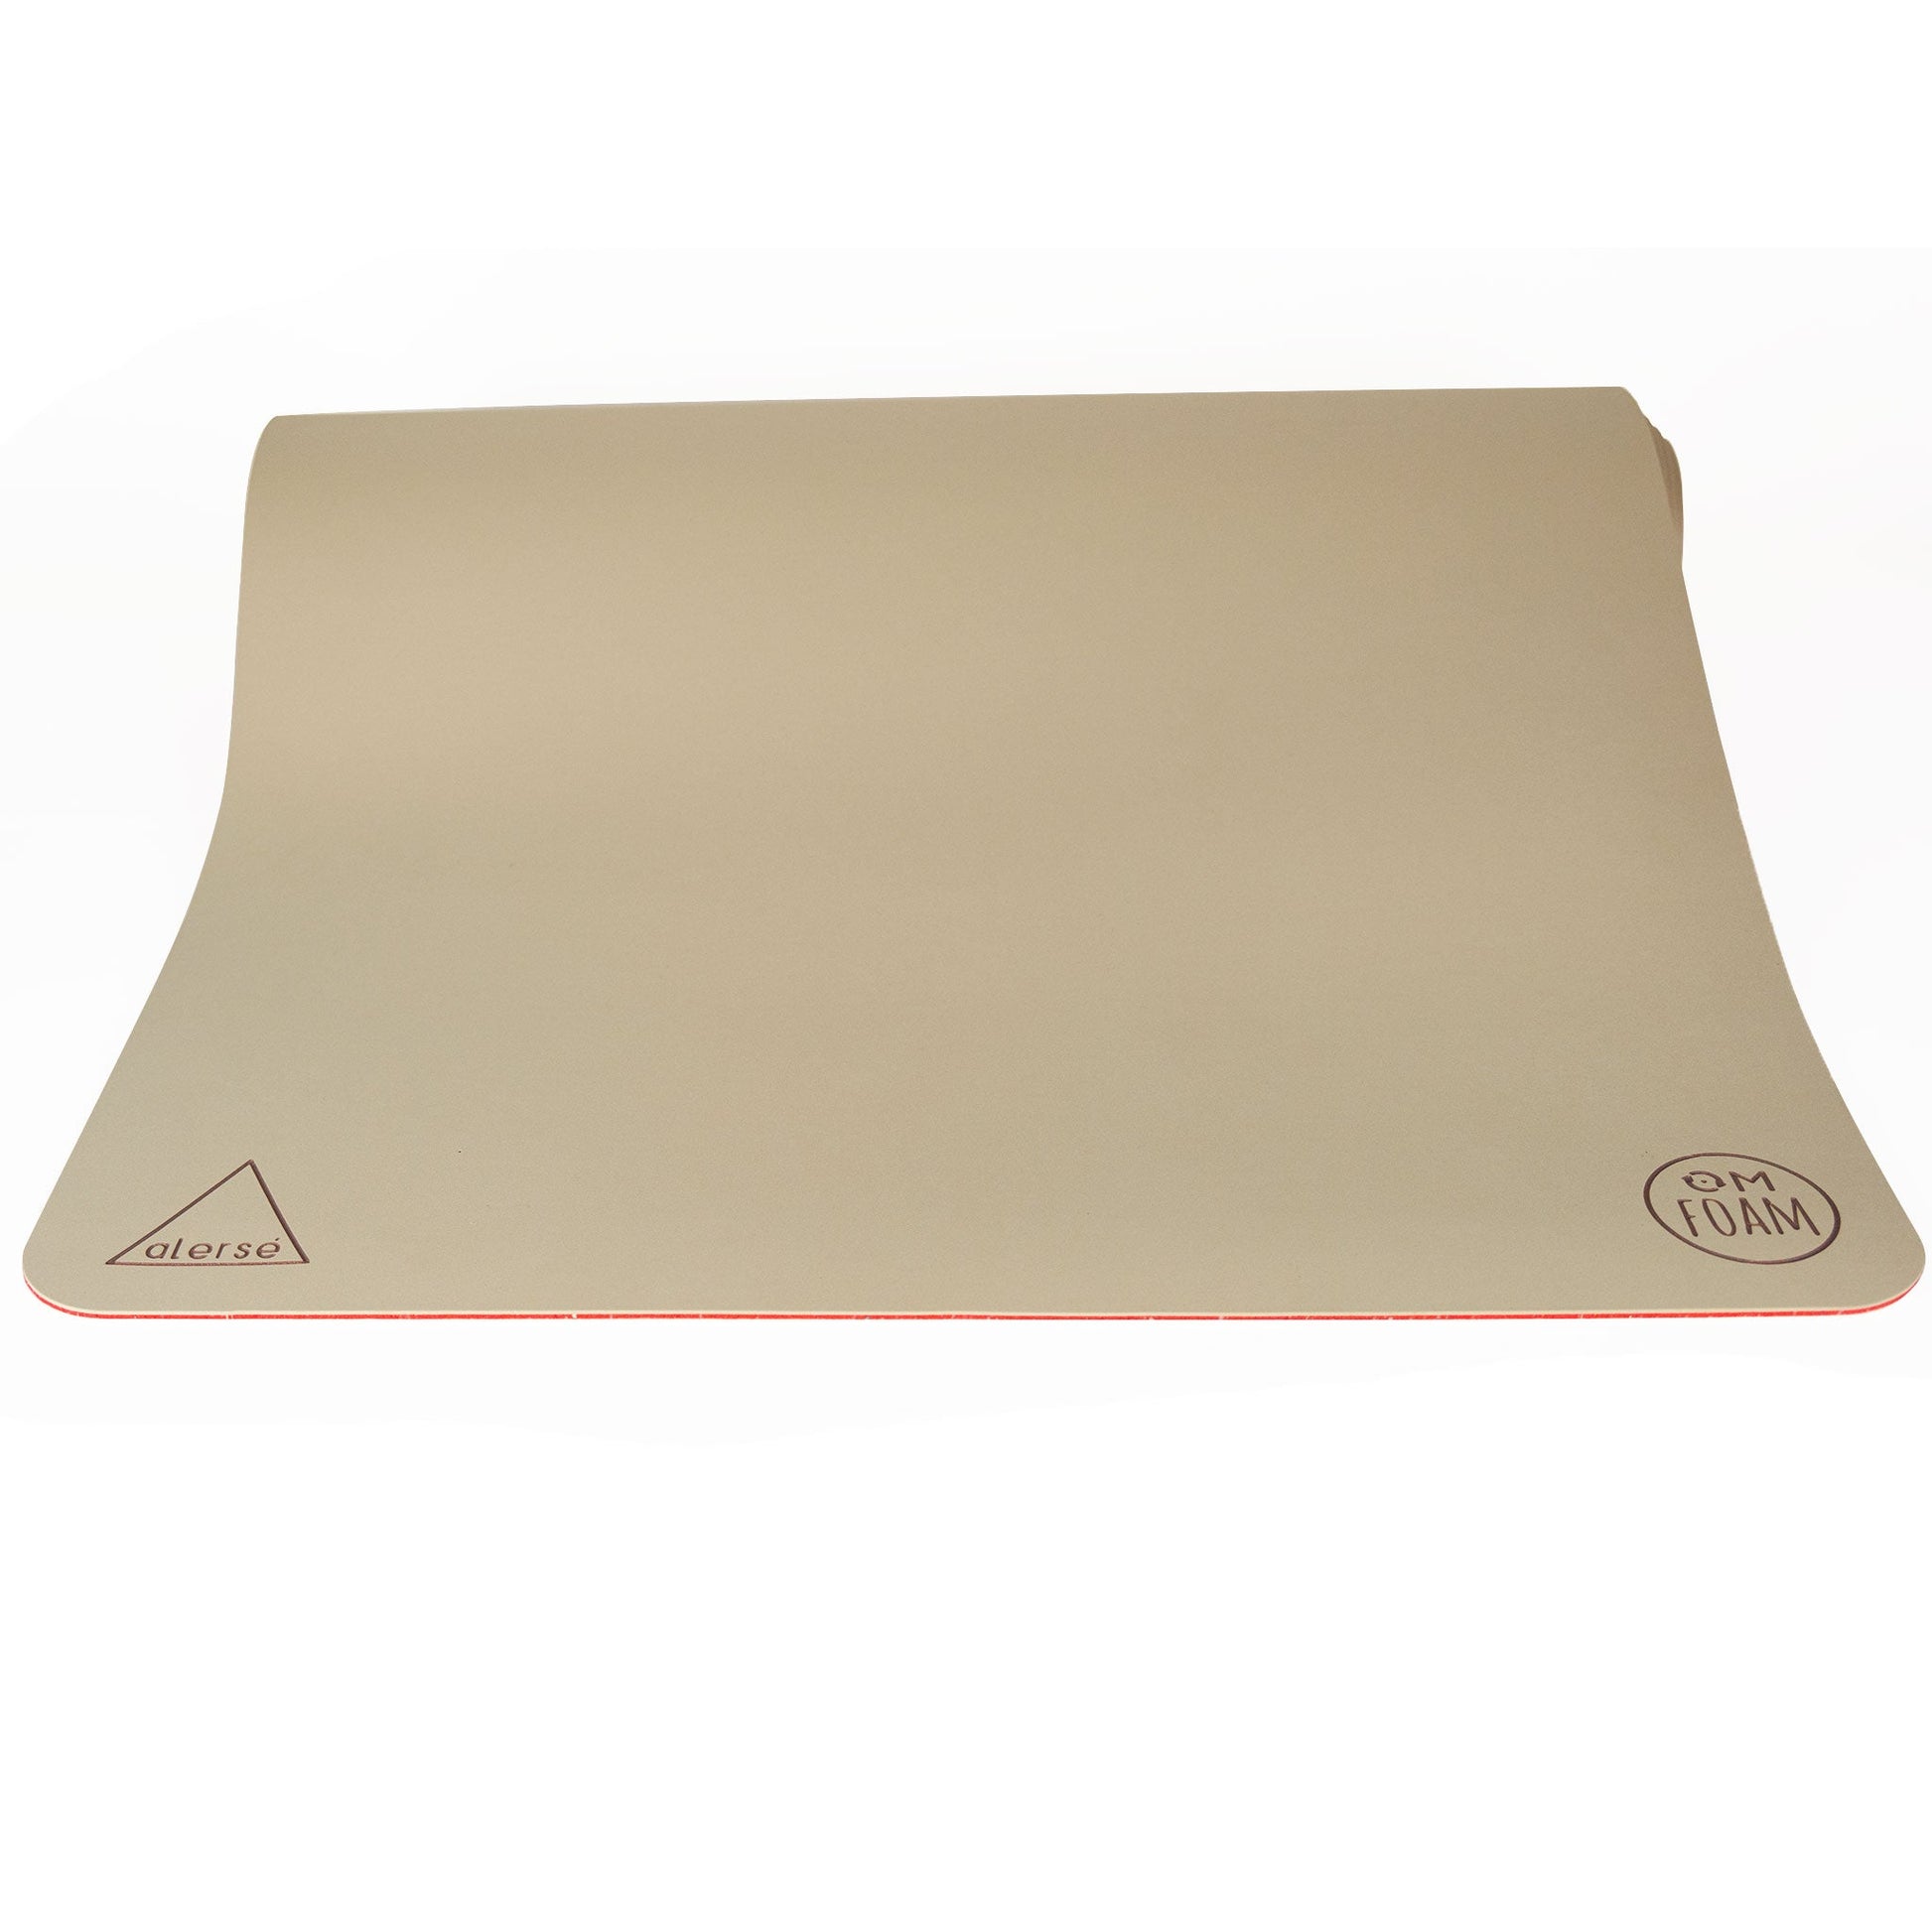 Imperfect - Final Sale - Alerse LIGHT Yoga Mat - Premium 6mm thick, 2.